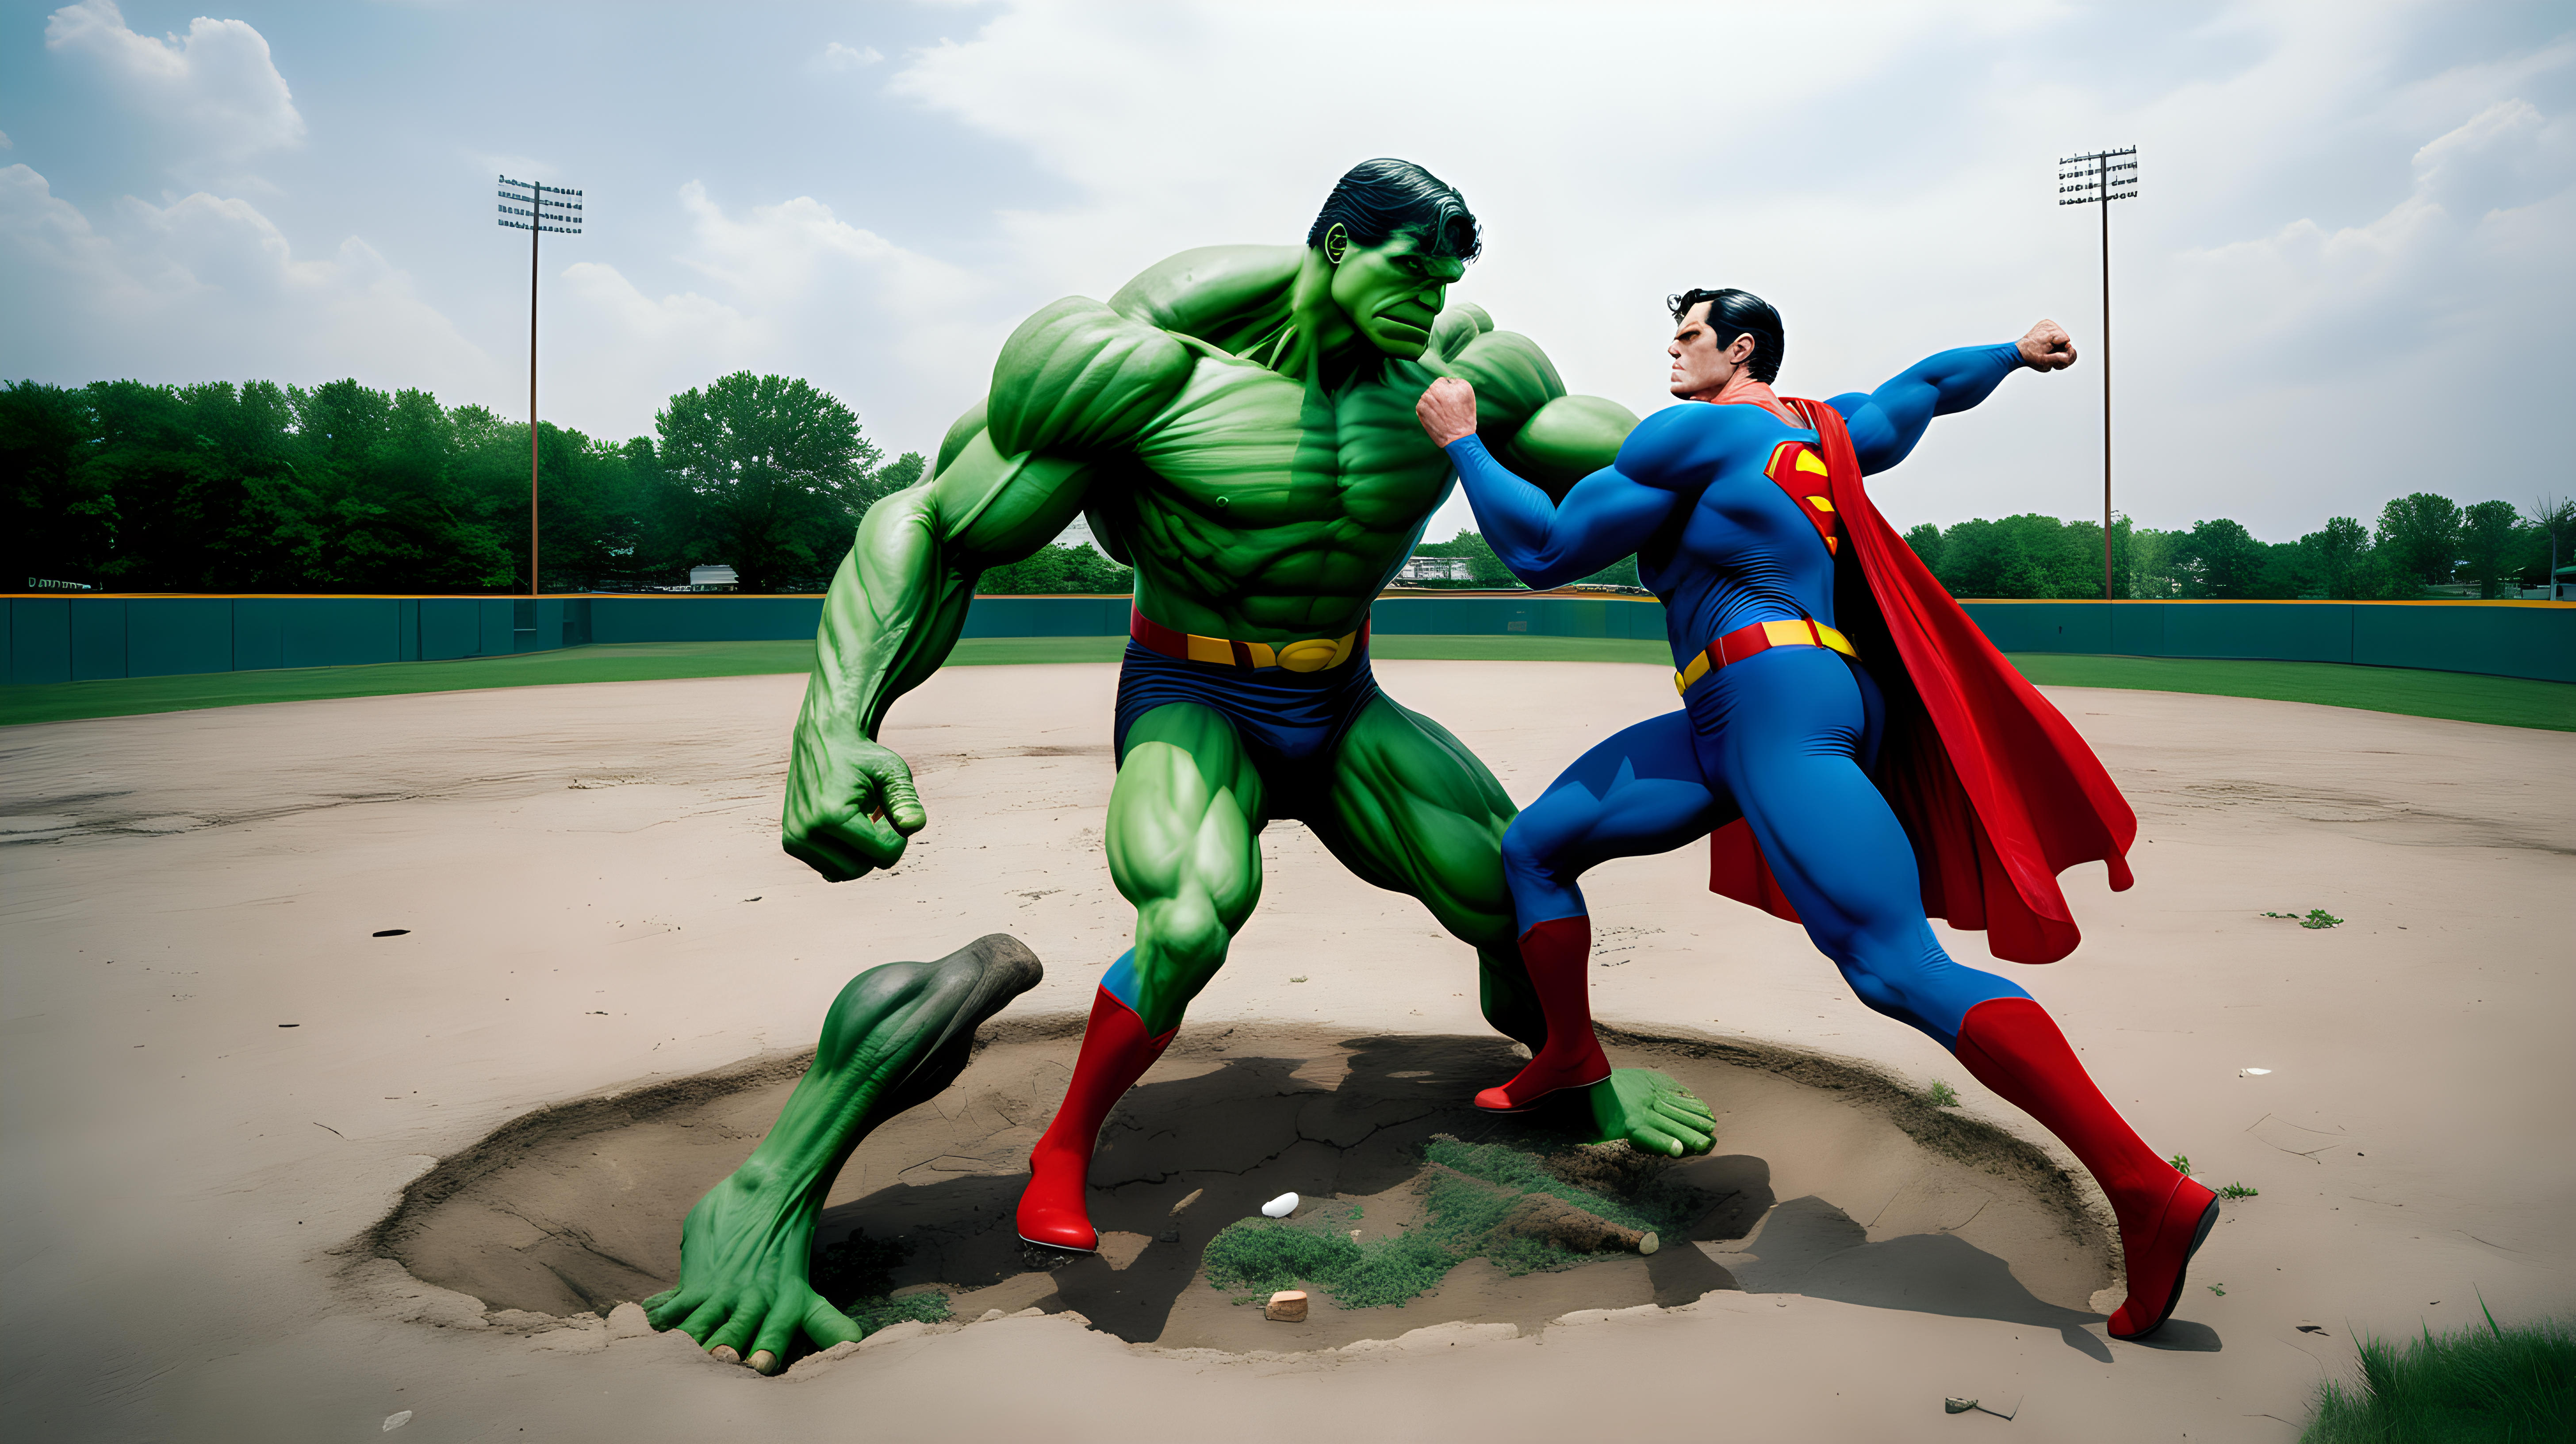 Superman fights the hulk in an abandoned baseball